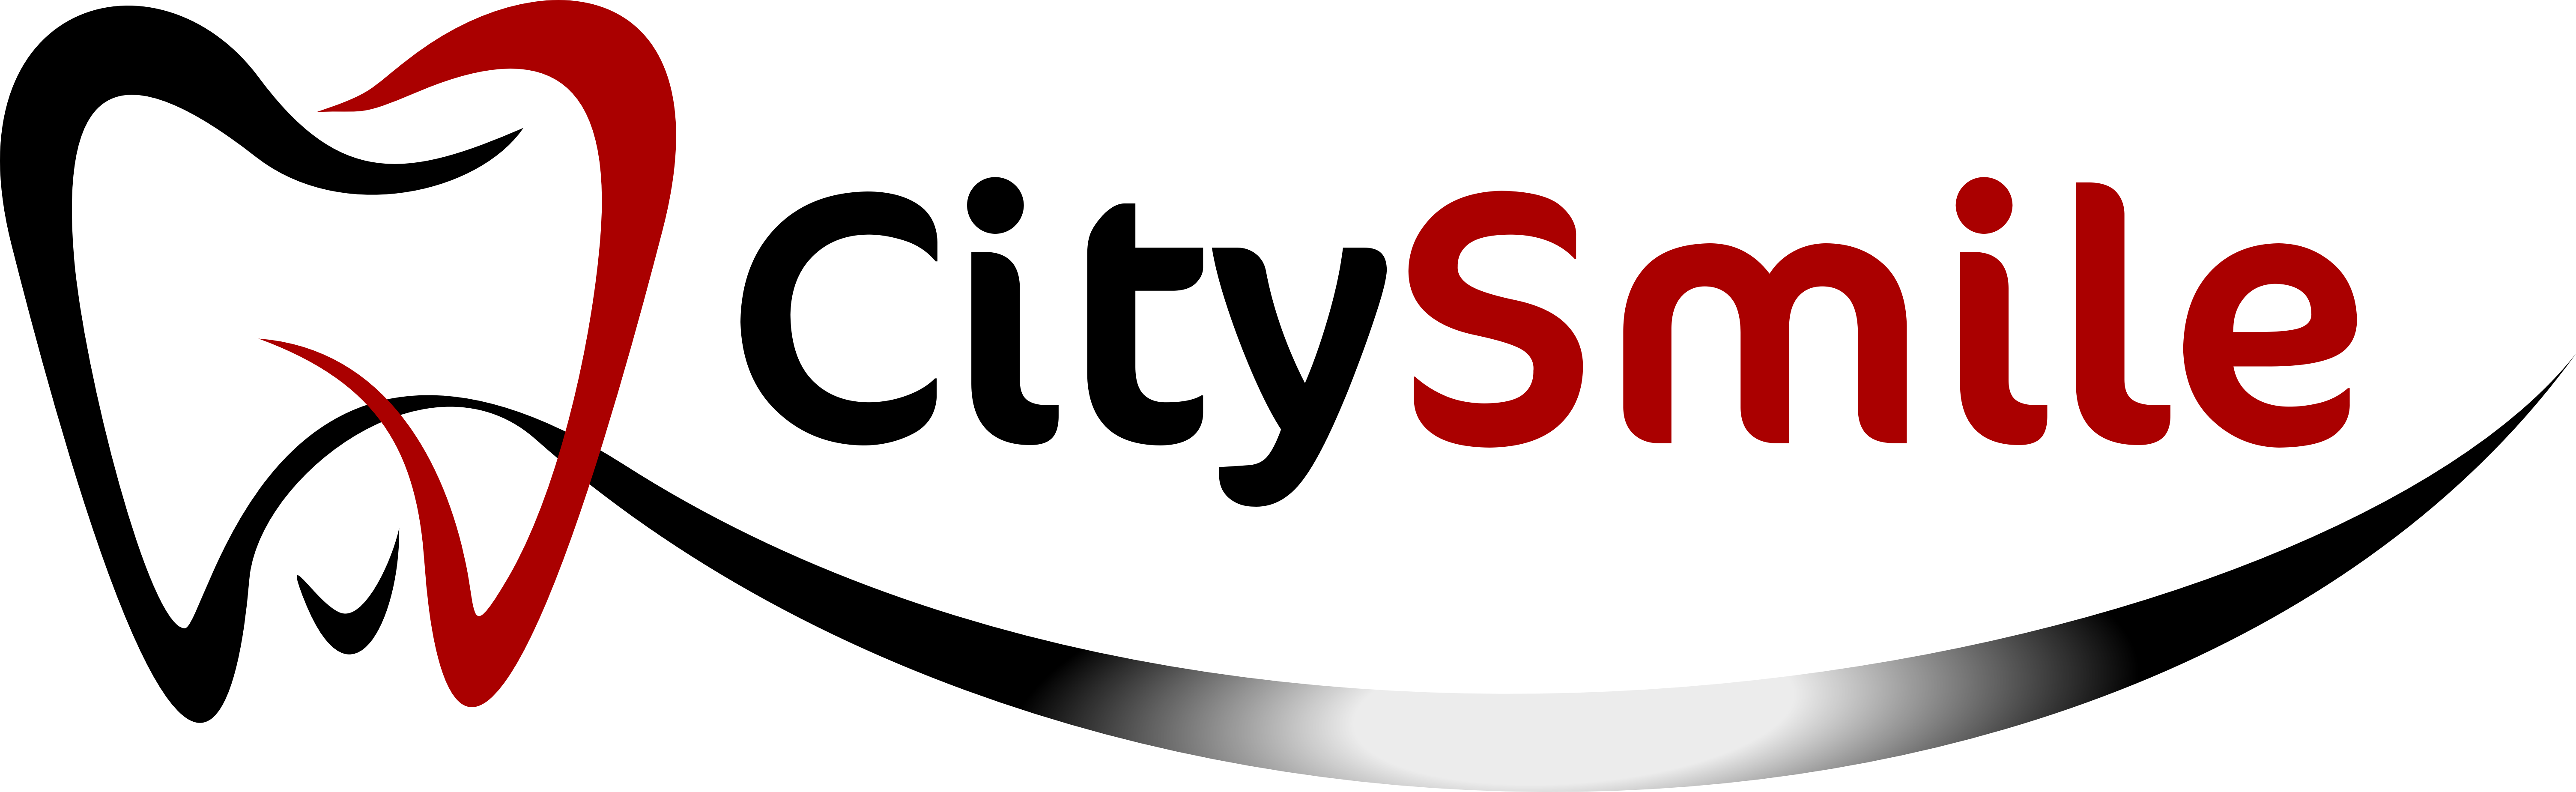 clipart smile smile logo